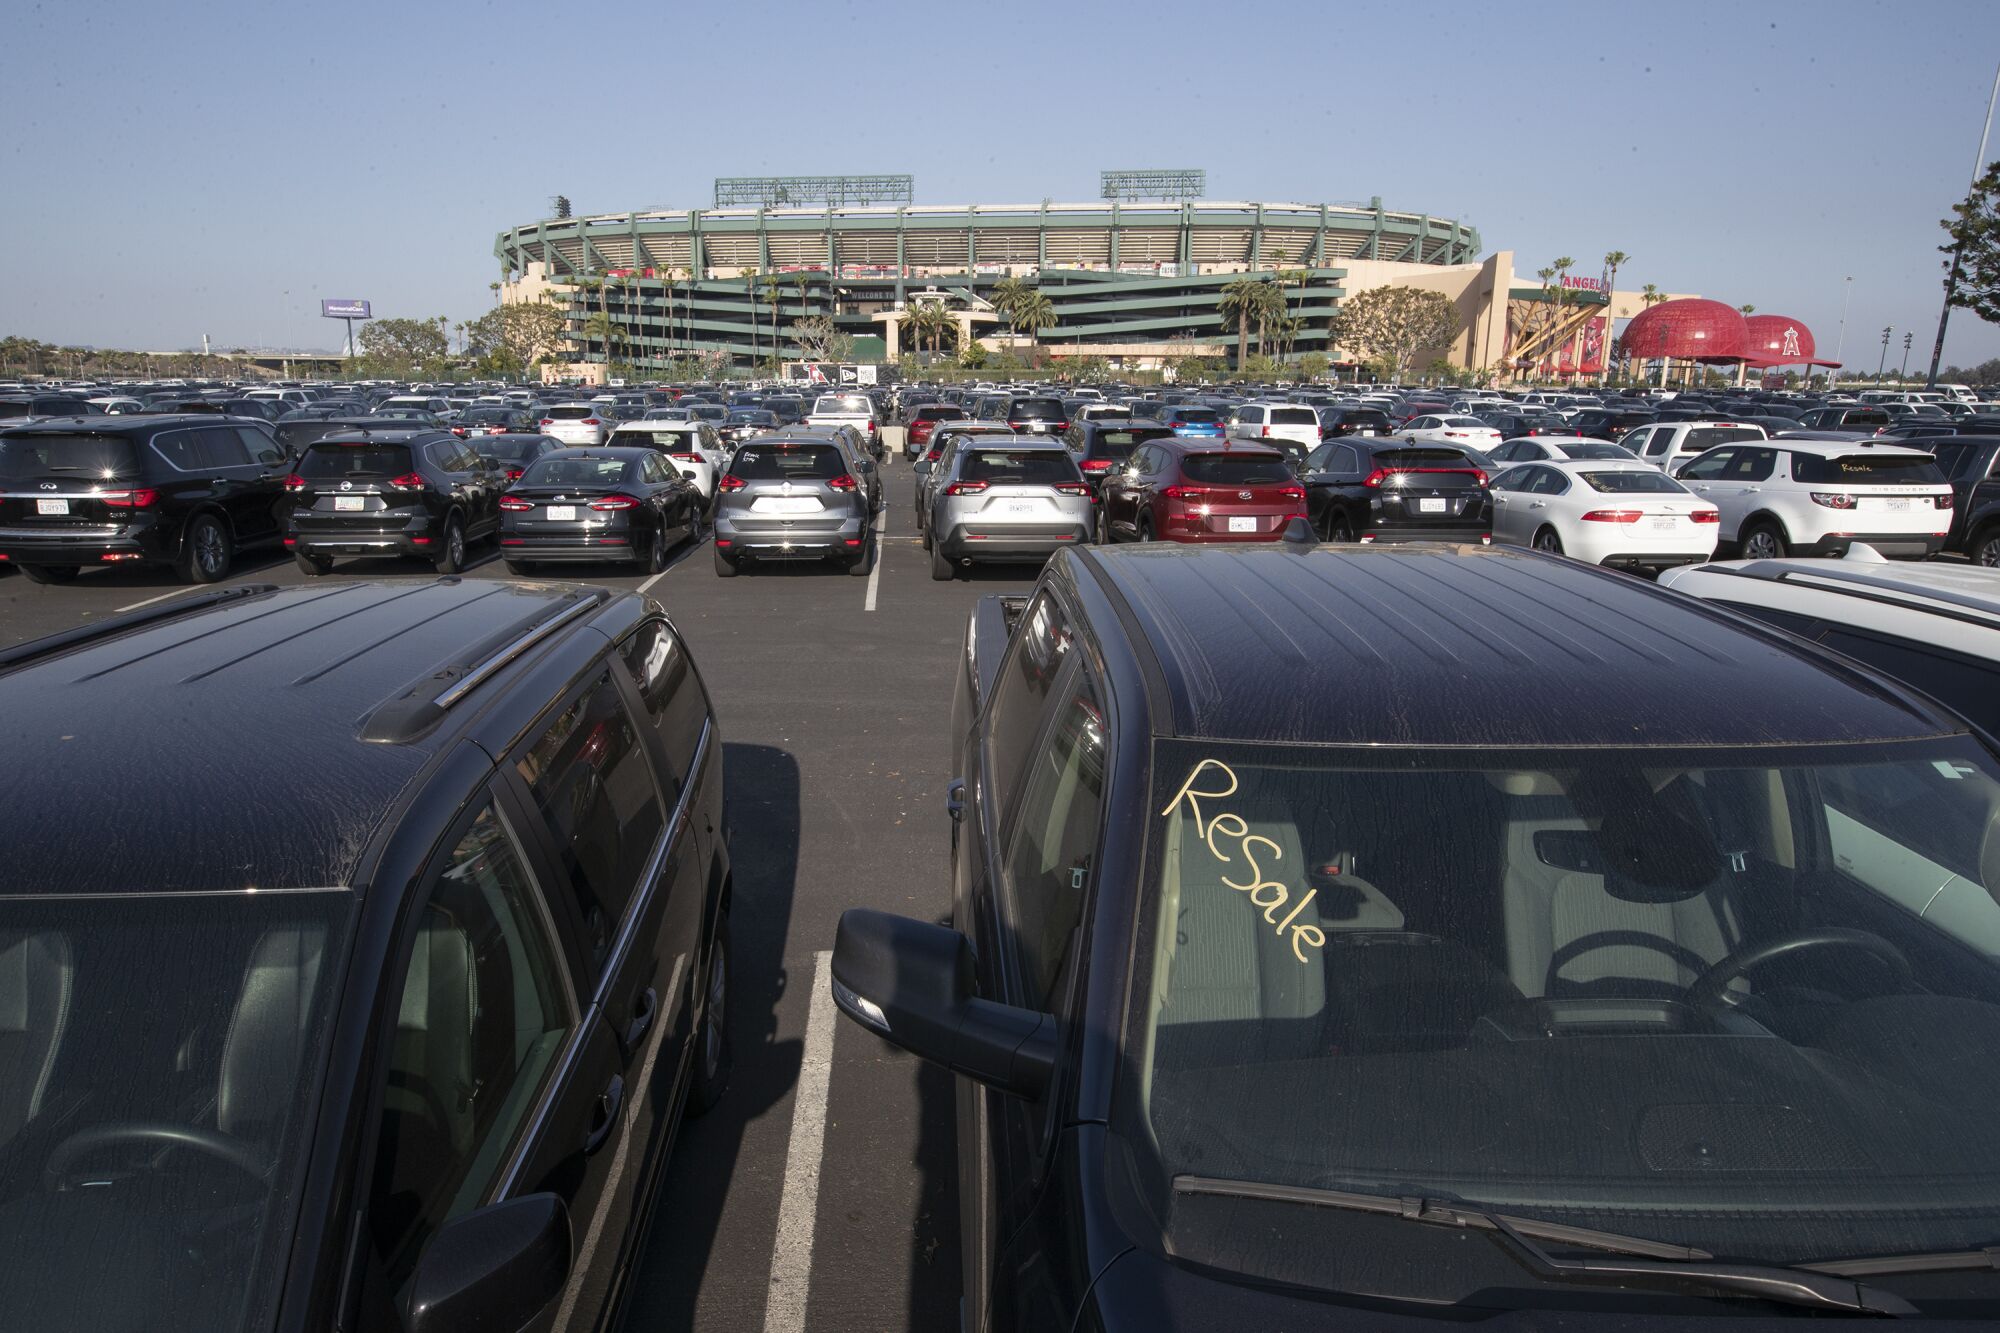 Rental cars sit idle at Angel Stadium.